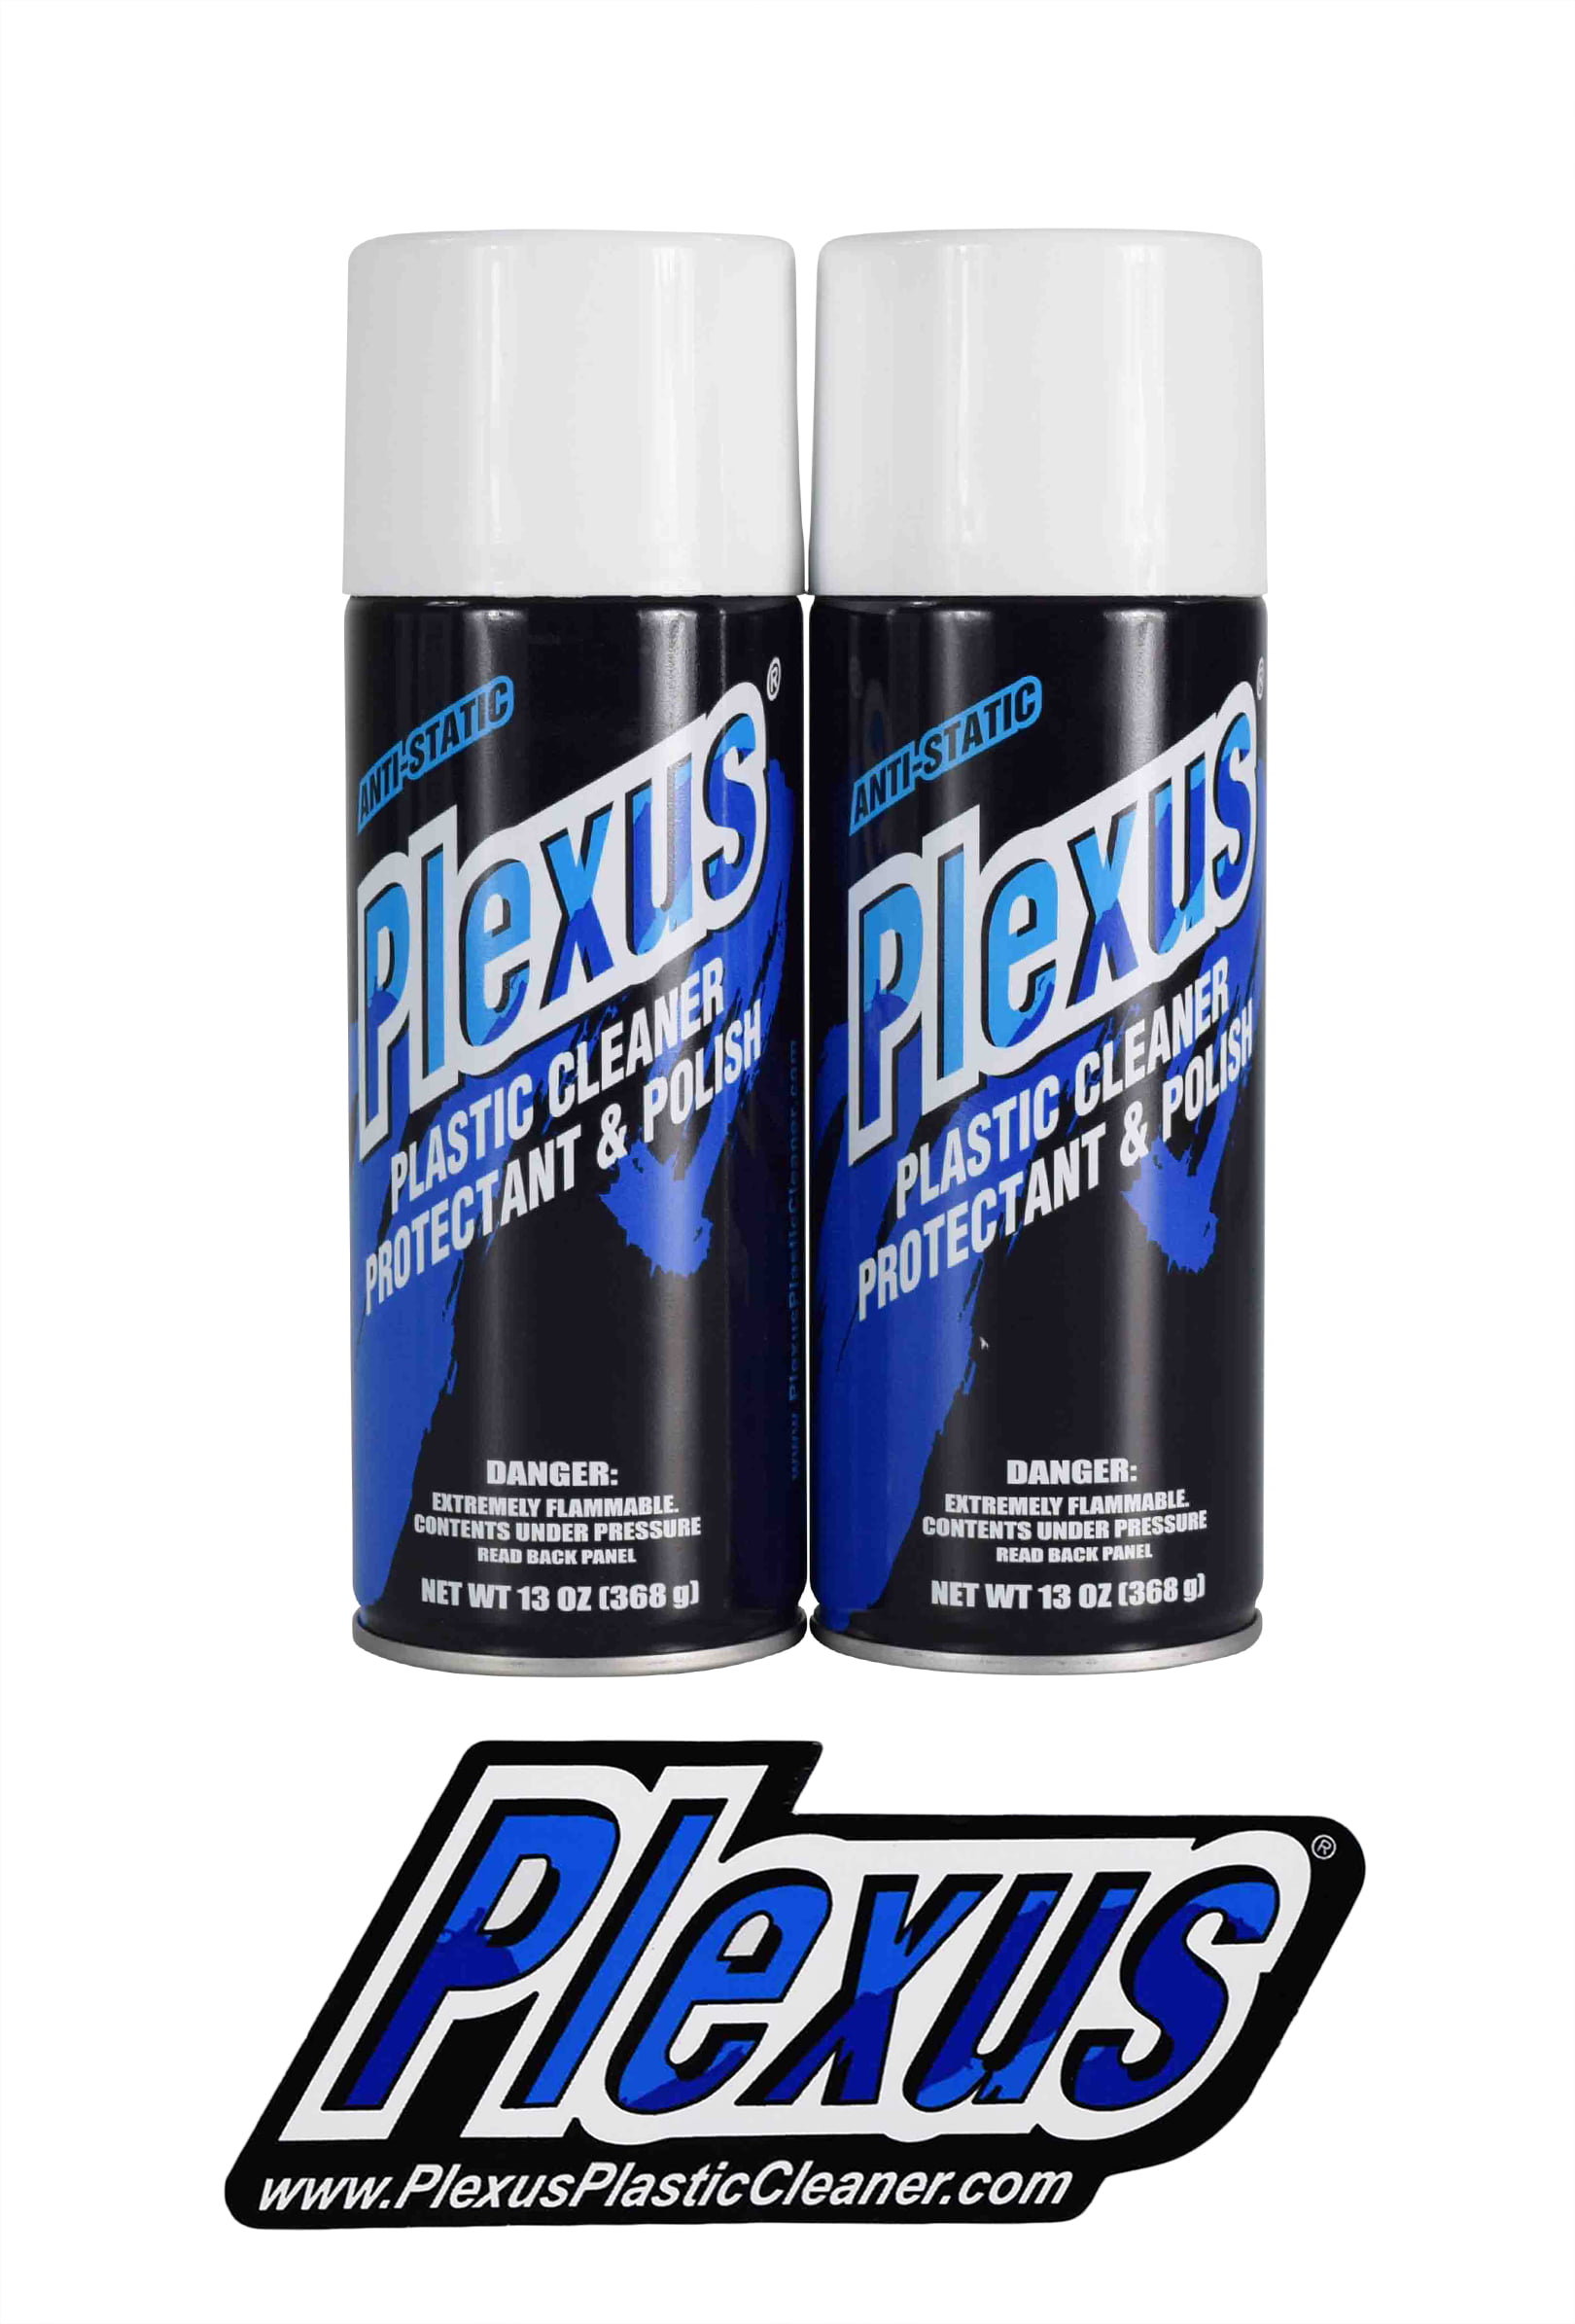 Plexus Plastic Cleaner Protectant and Polish 7oz